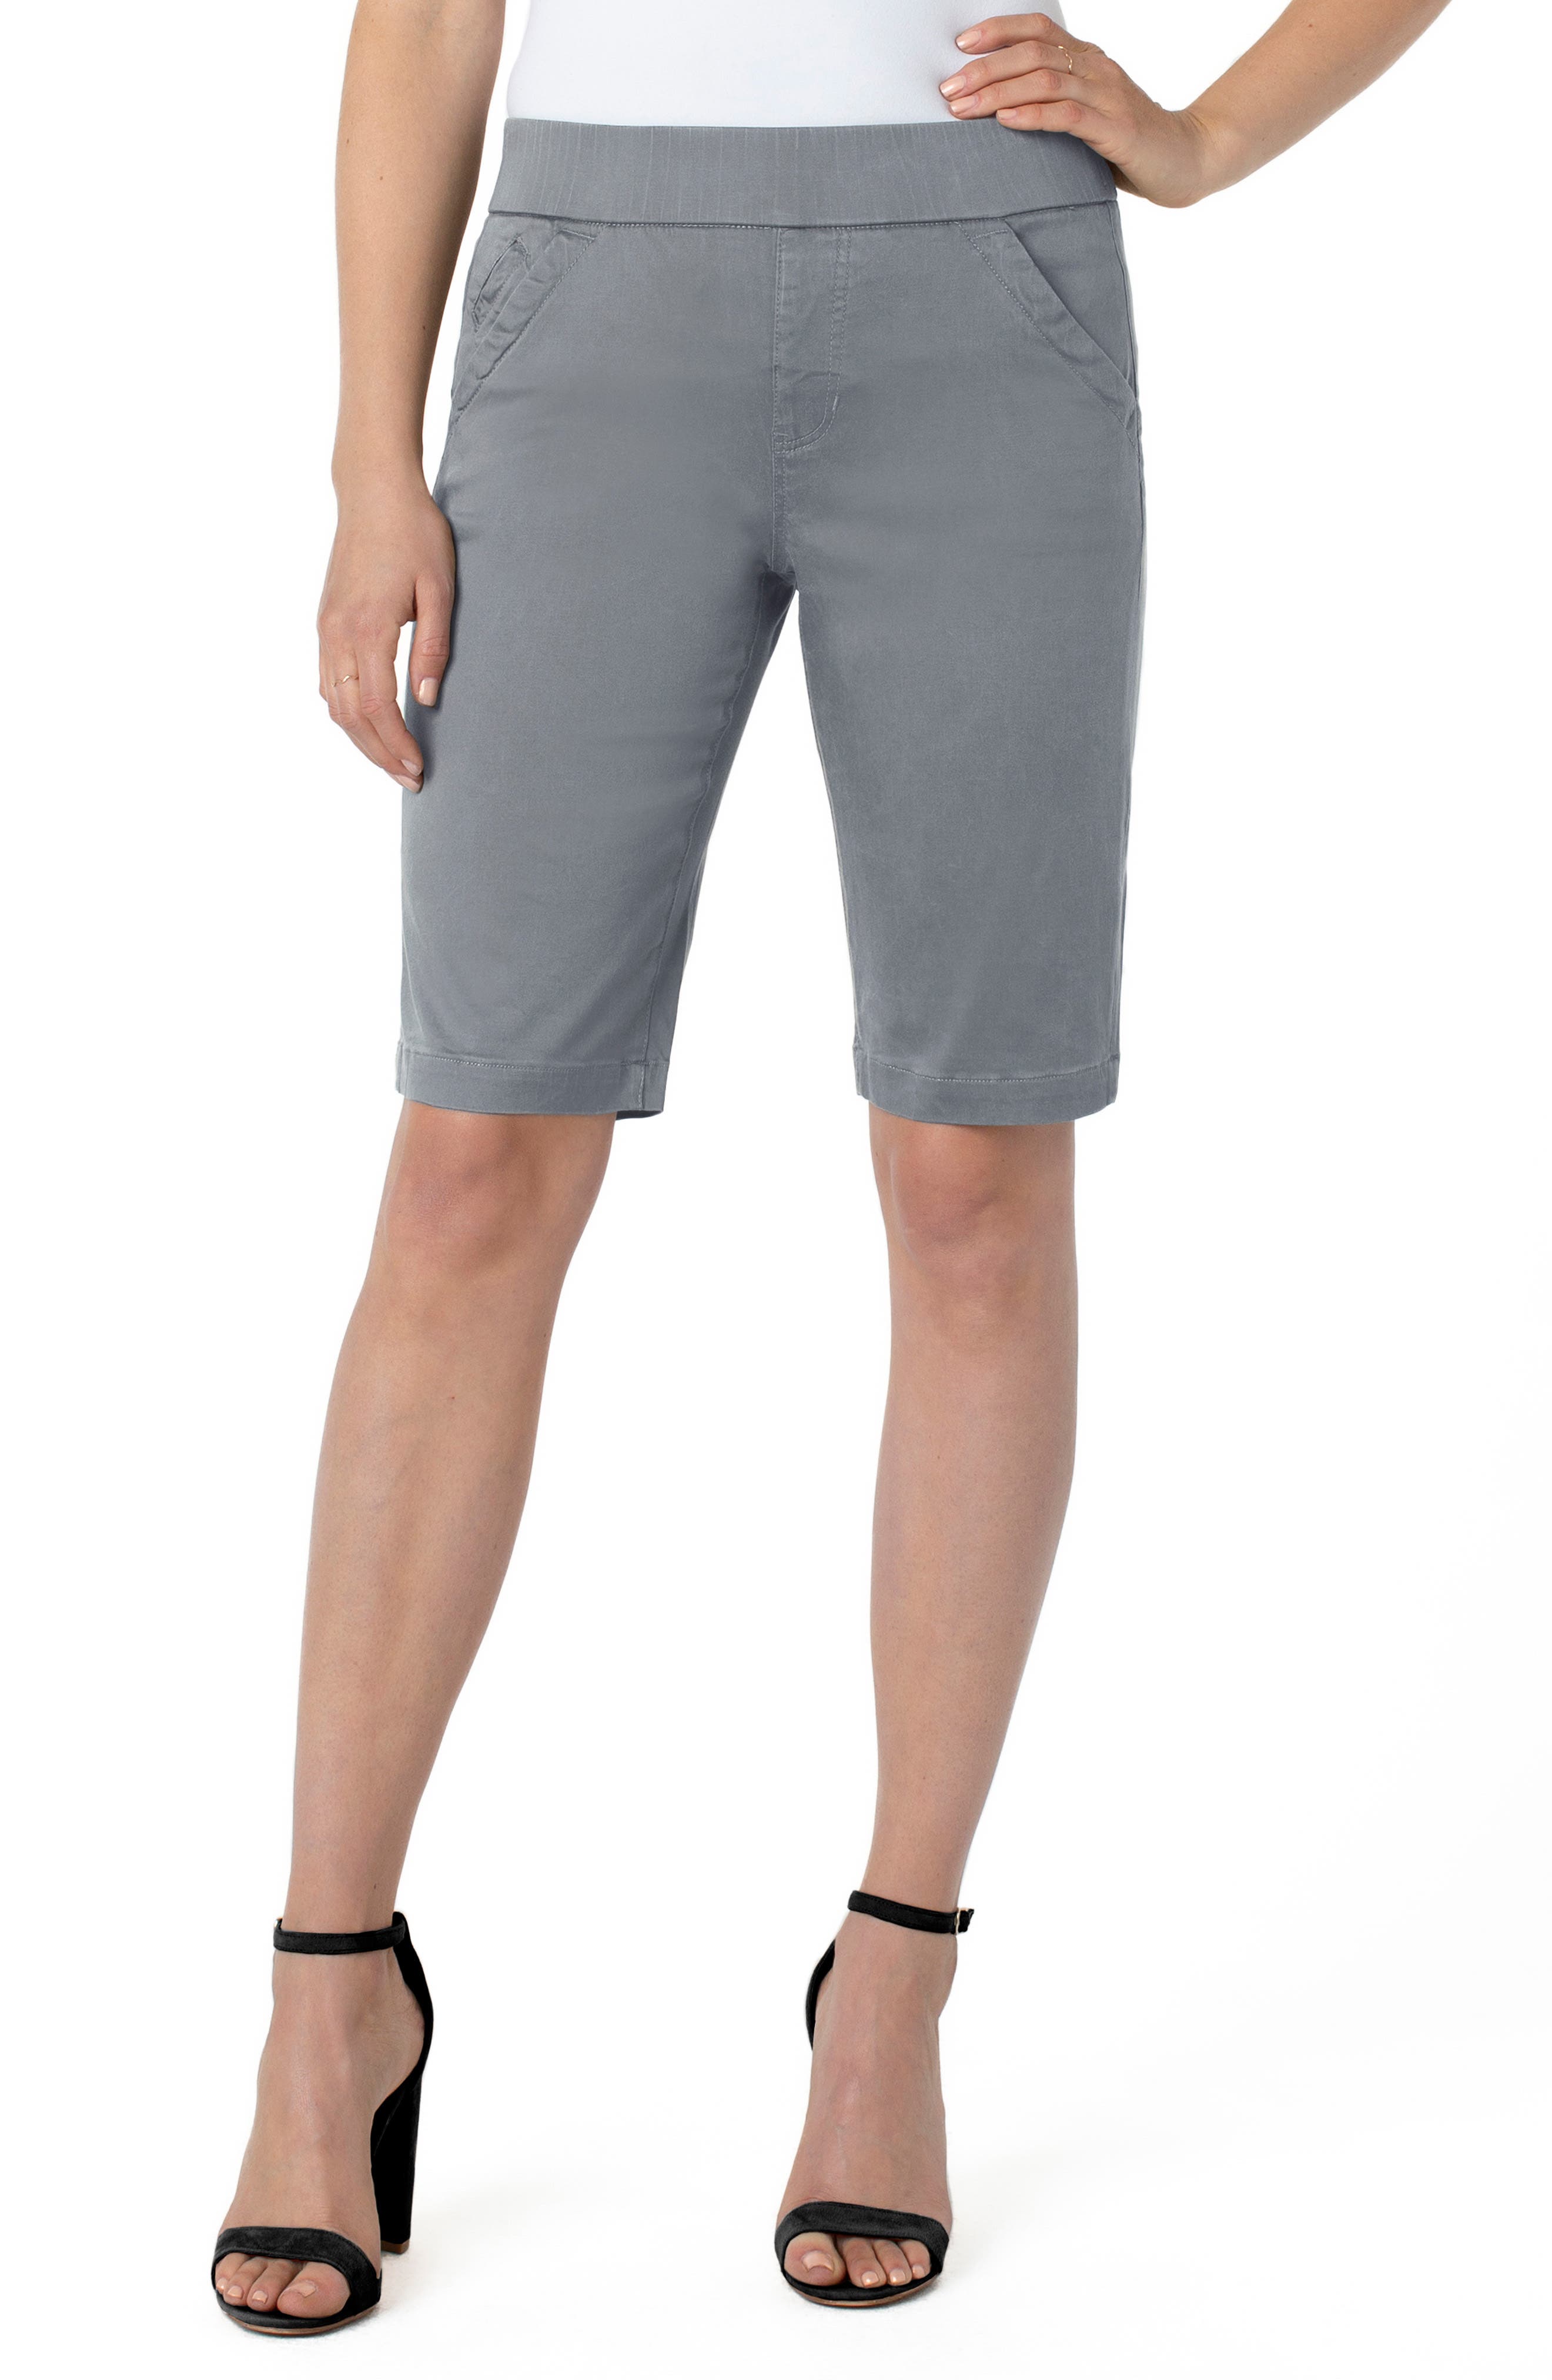 White Twinset Synthetic Shorts & Bermuda Shorts in Ivory Womens Clothing Shorts Knee-length shorts and long shorts 